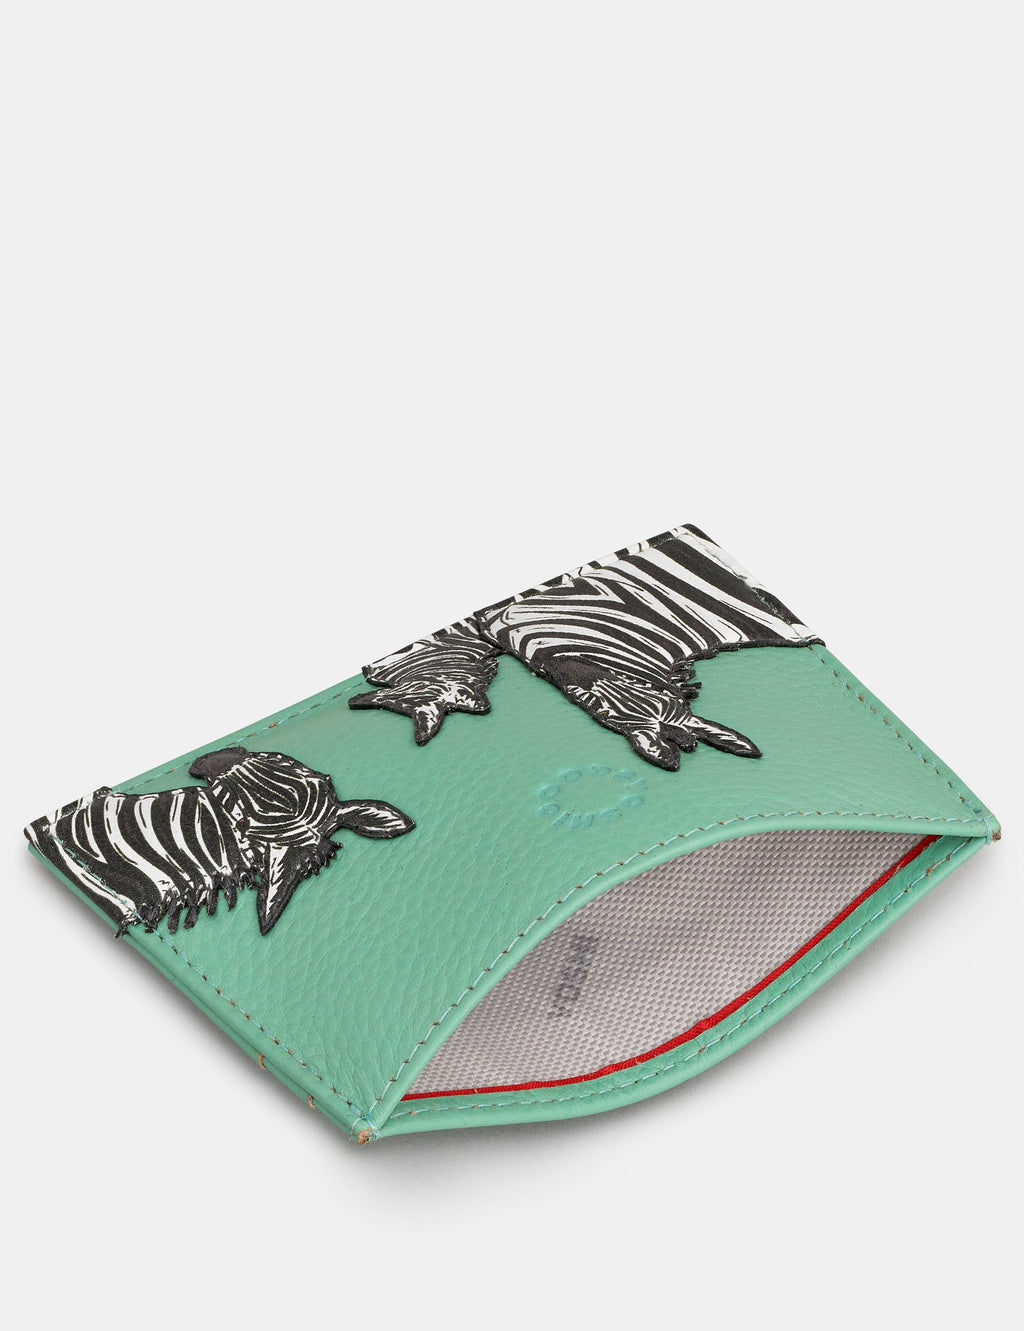 Yoshi - Mint Green Zebra Card Holder RFID